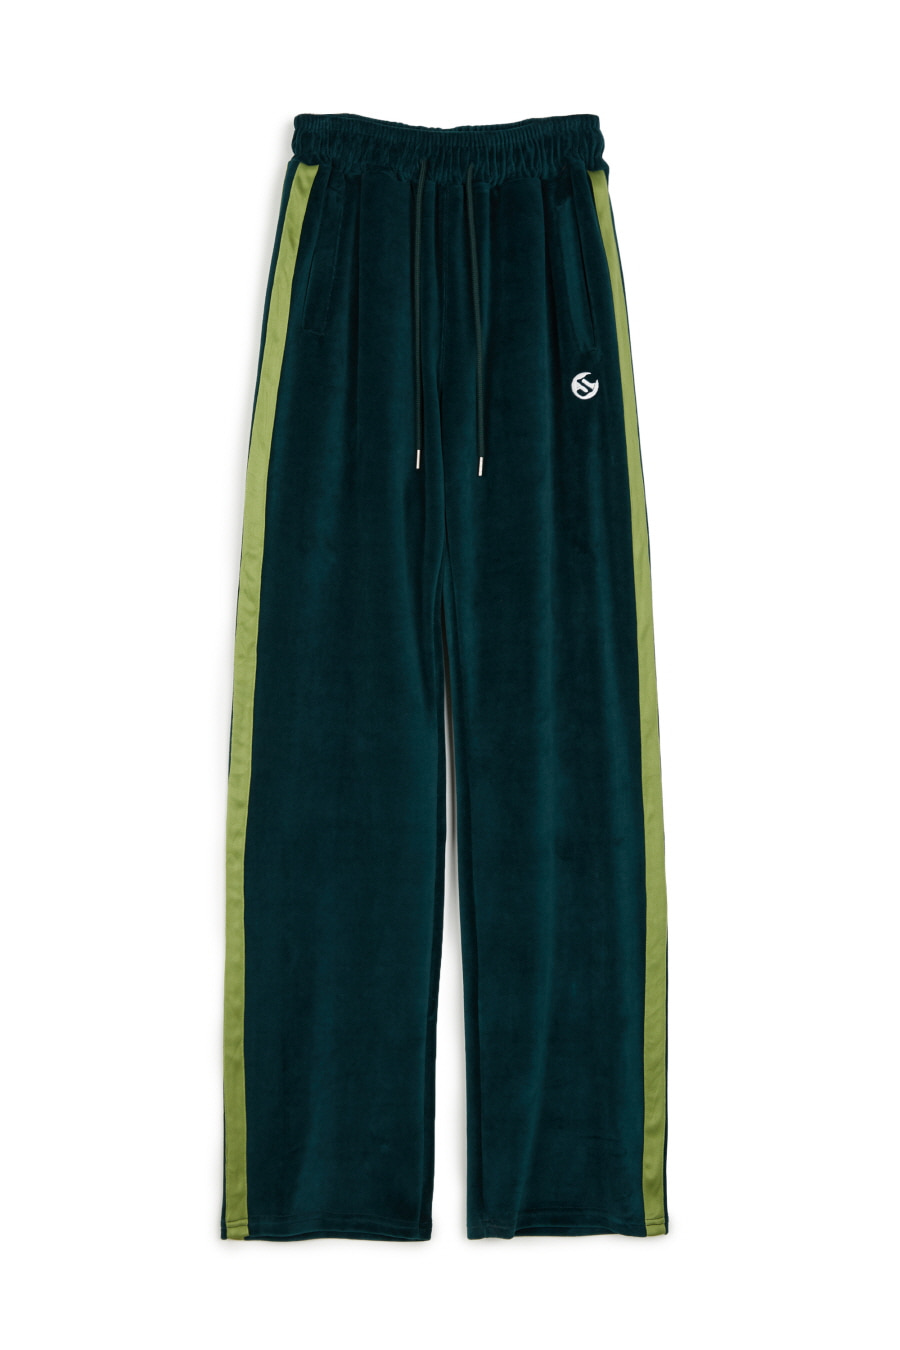 S Logo Cotton Velour Track Pants - Fathom Green